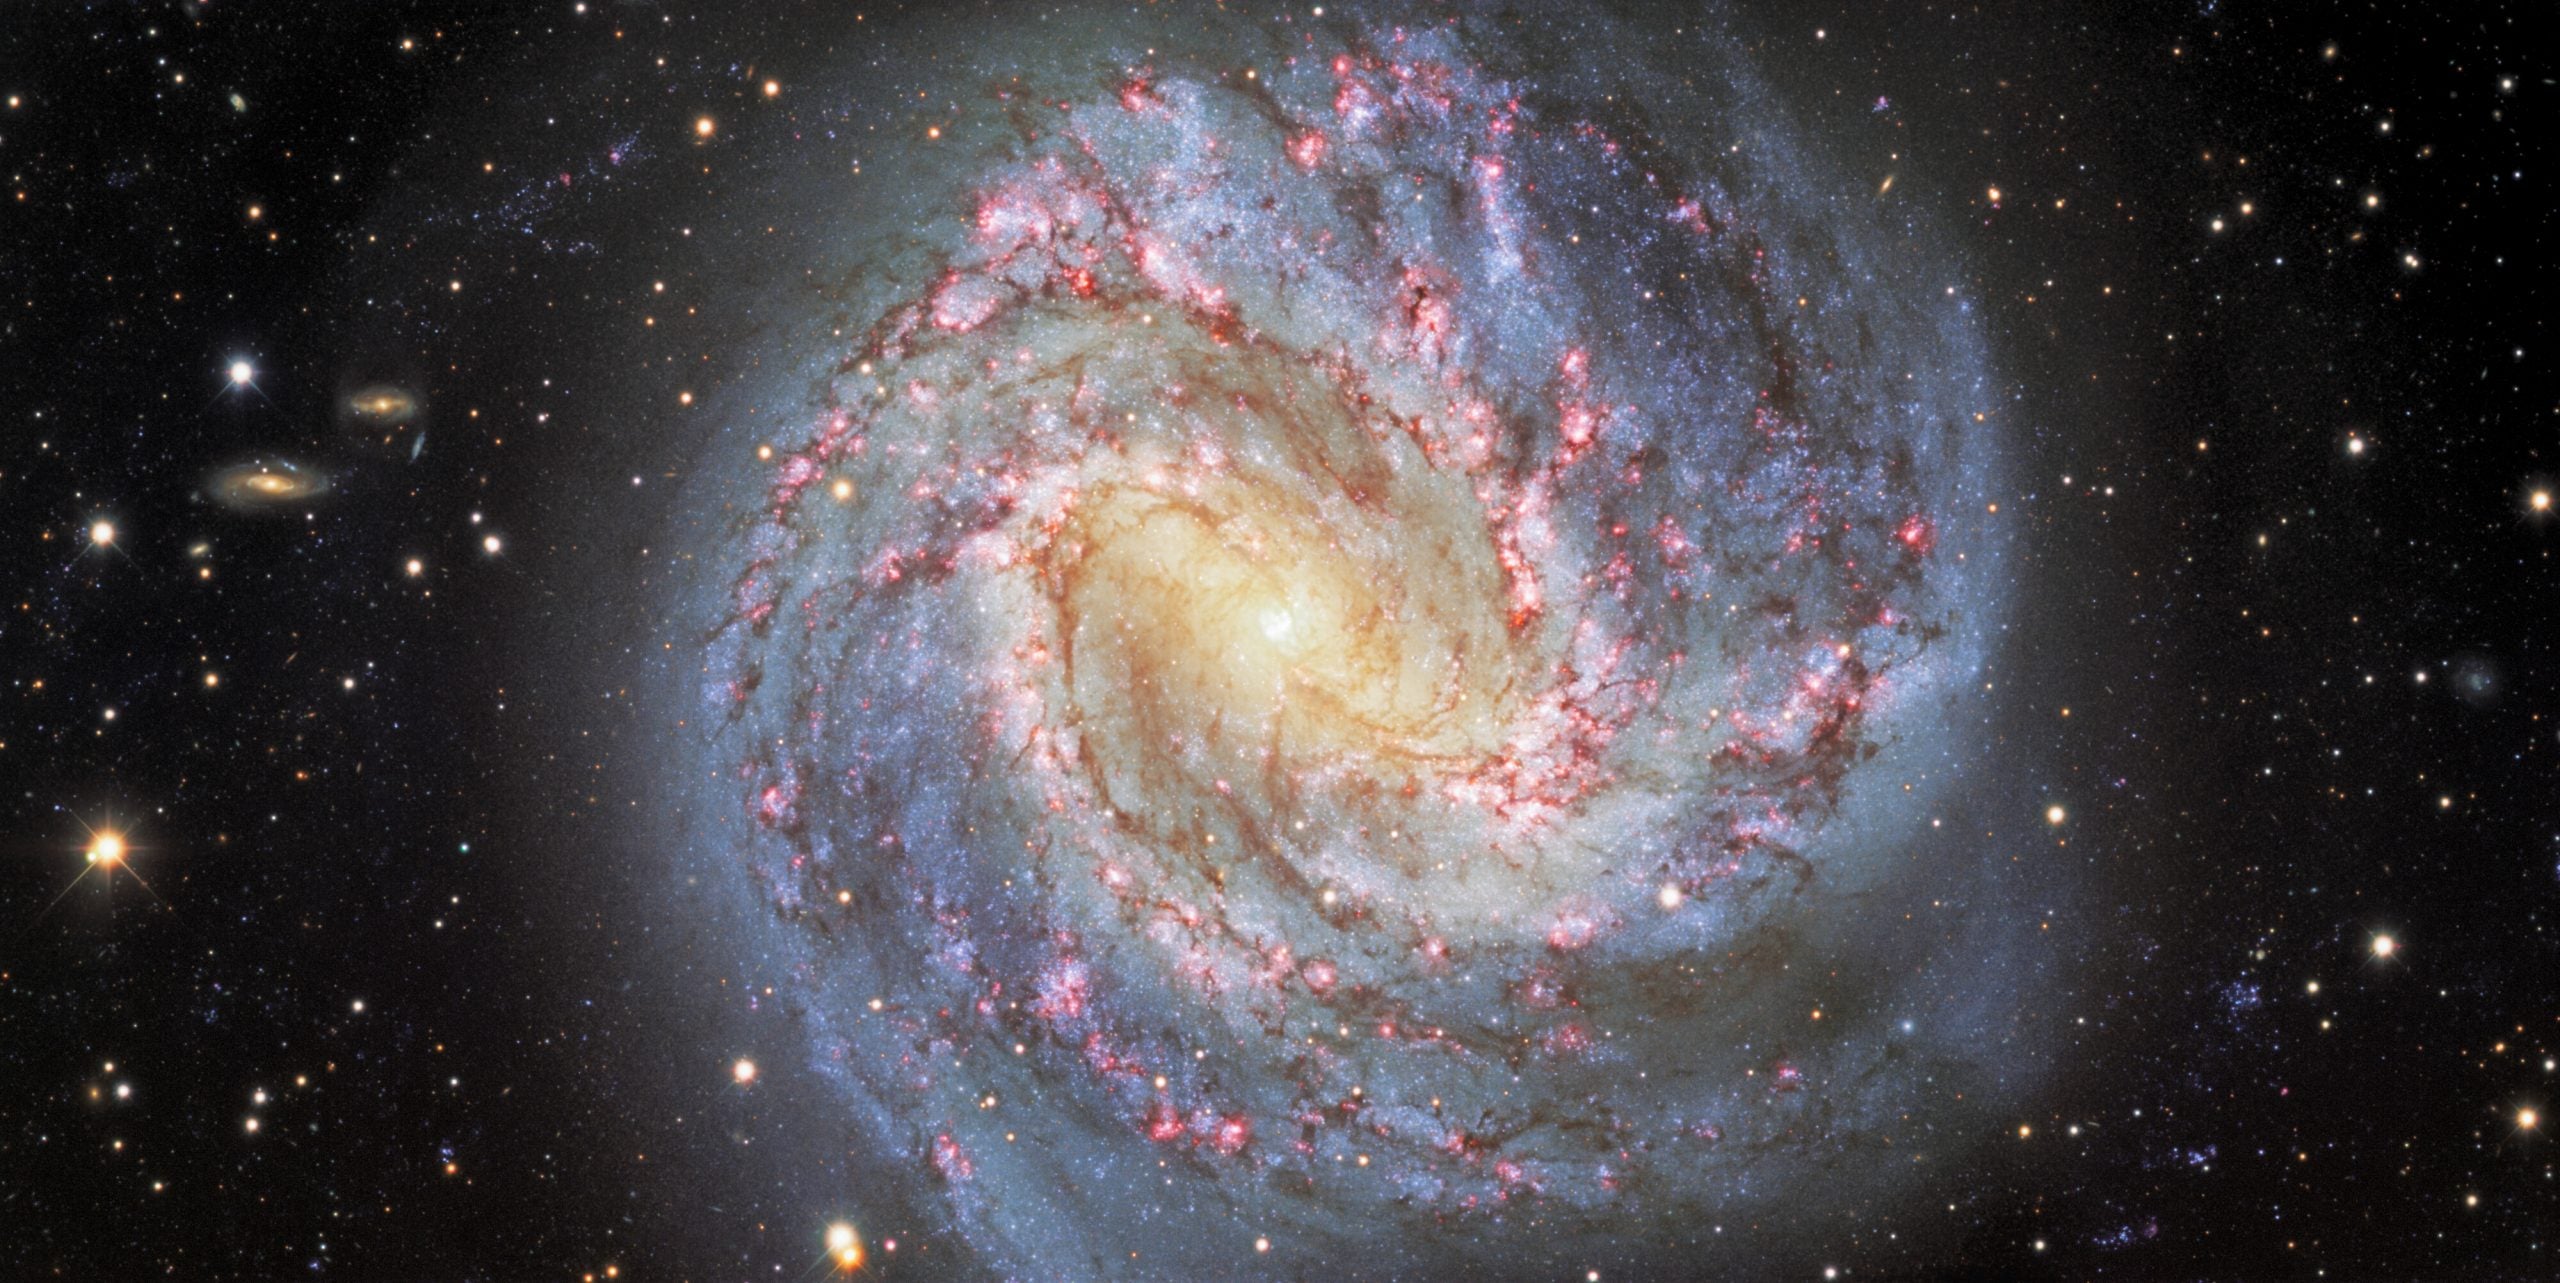 Messier 83, a galaxy 15 million lightyears from Earth. (Image: CTIO/NOIRLab/DOE/NSF/AURA; Acknowledgment: M. Soraisam (University of Illinois); Image processing: Travis Rector (University of Alaska Anchorage), Mahdi Zamani and Davide de Martin)